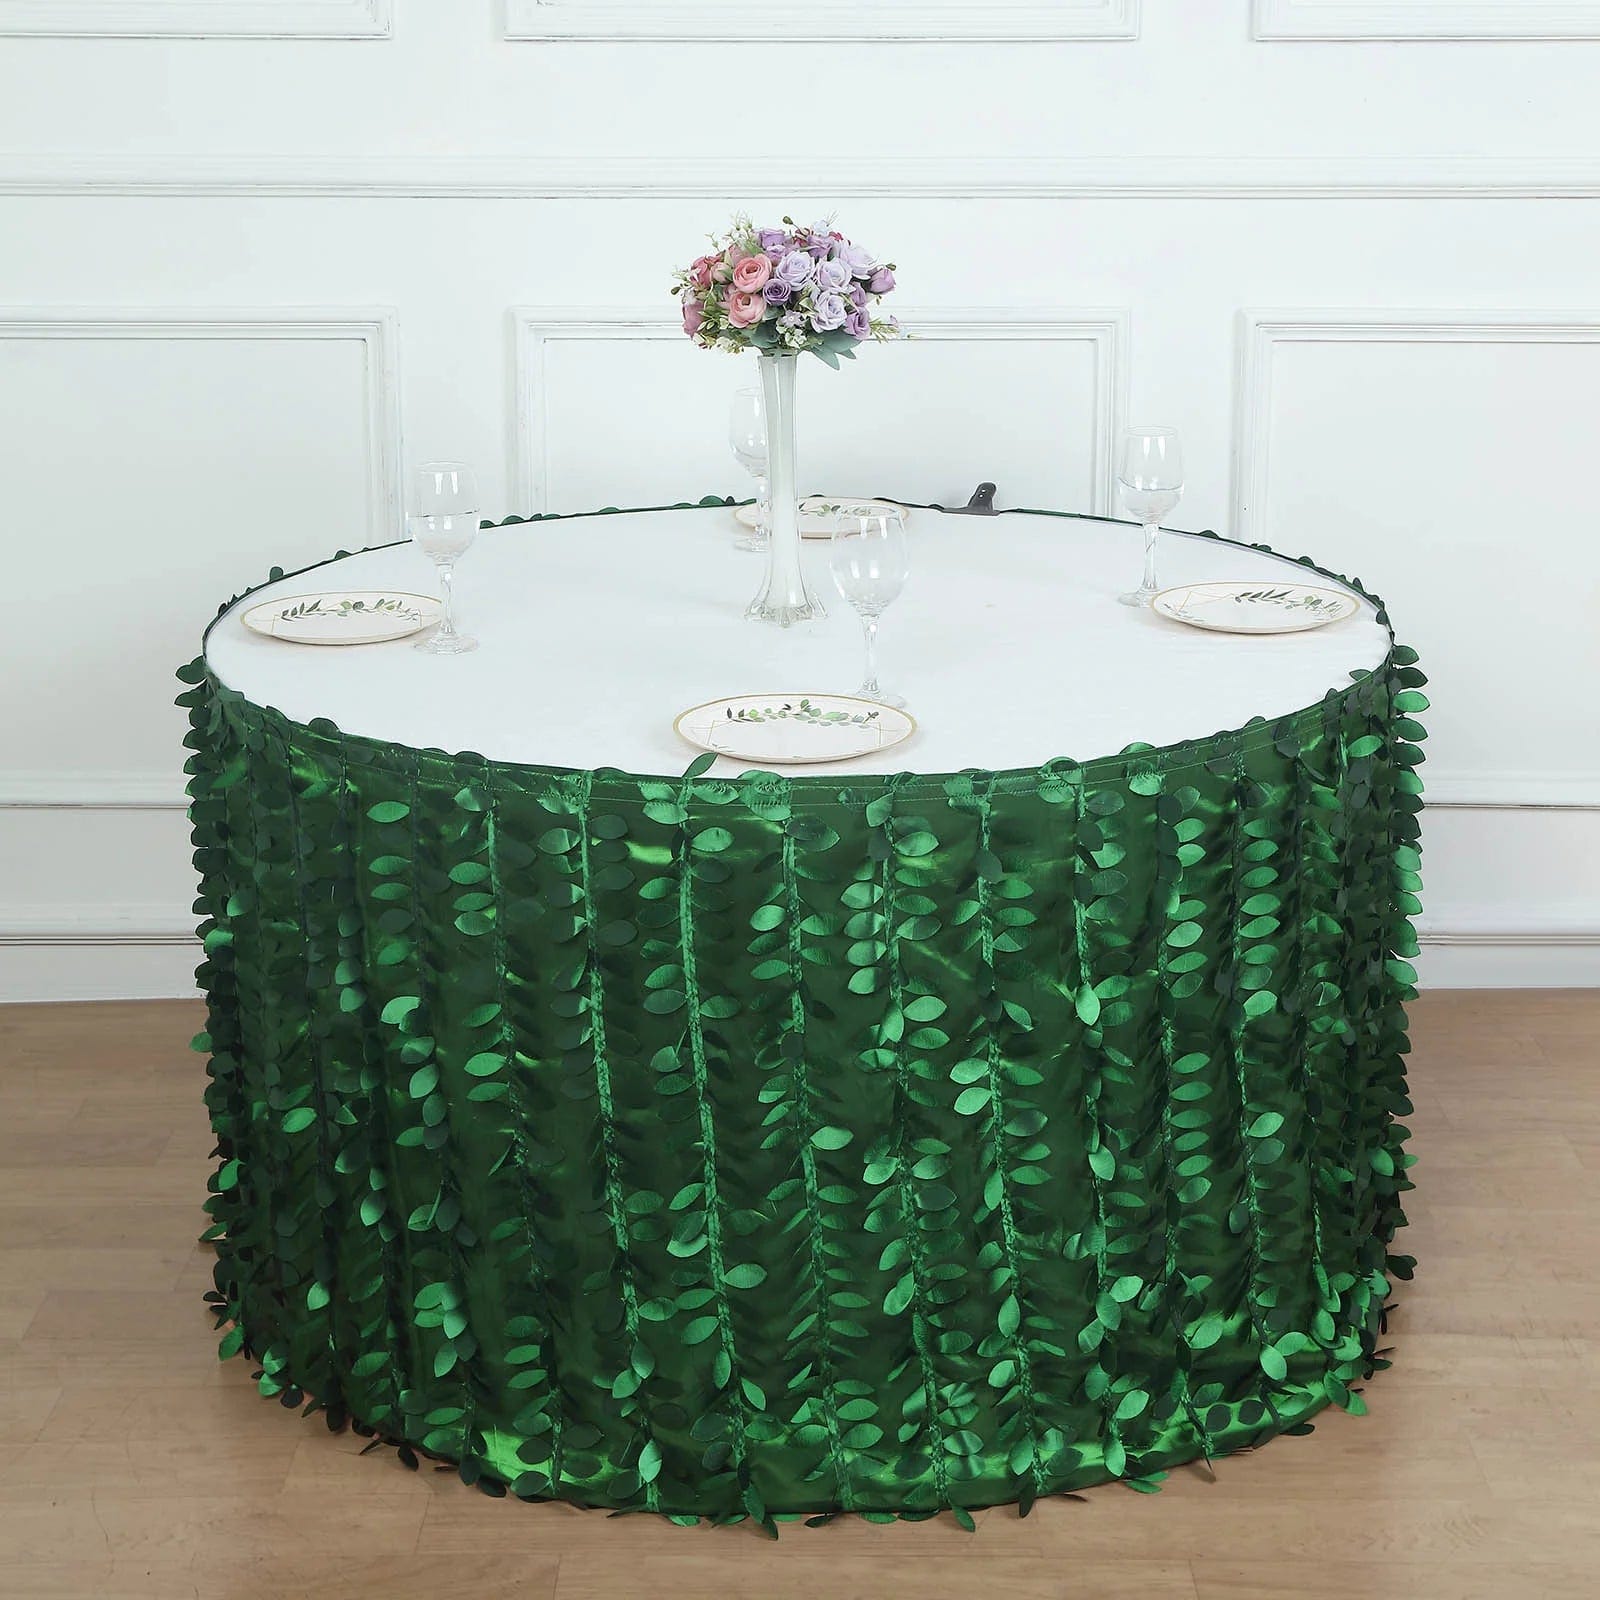 Green 17 feet Taffeta Table Skirt with Leaves Petals Design